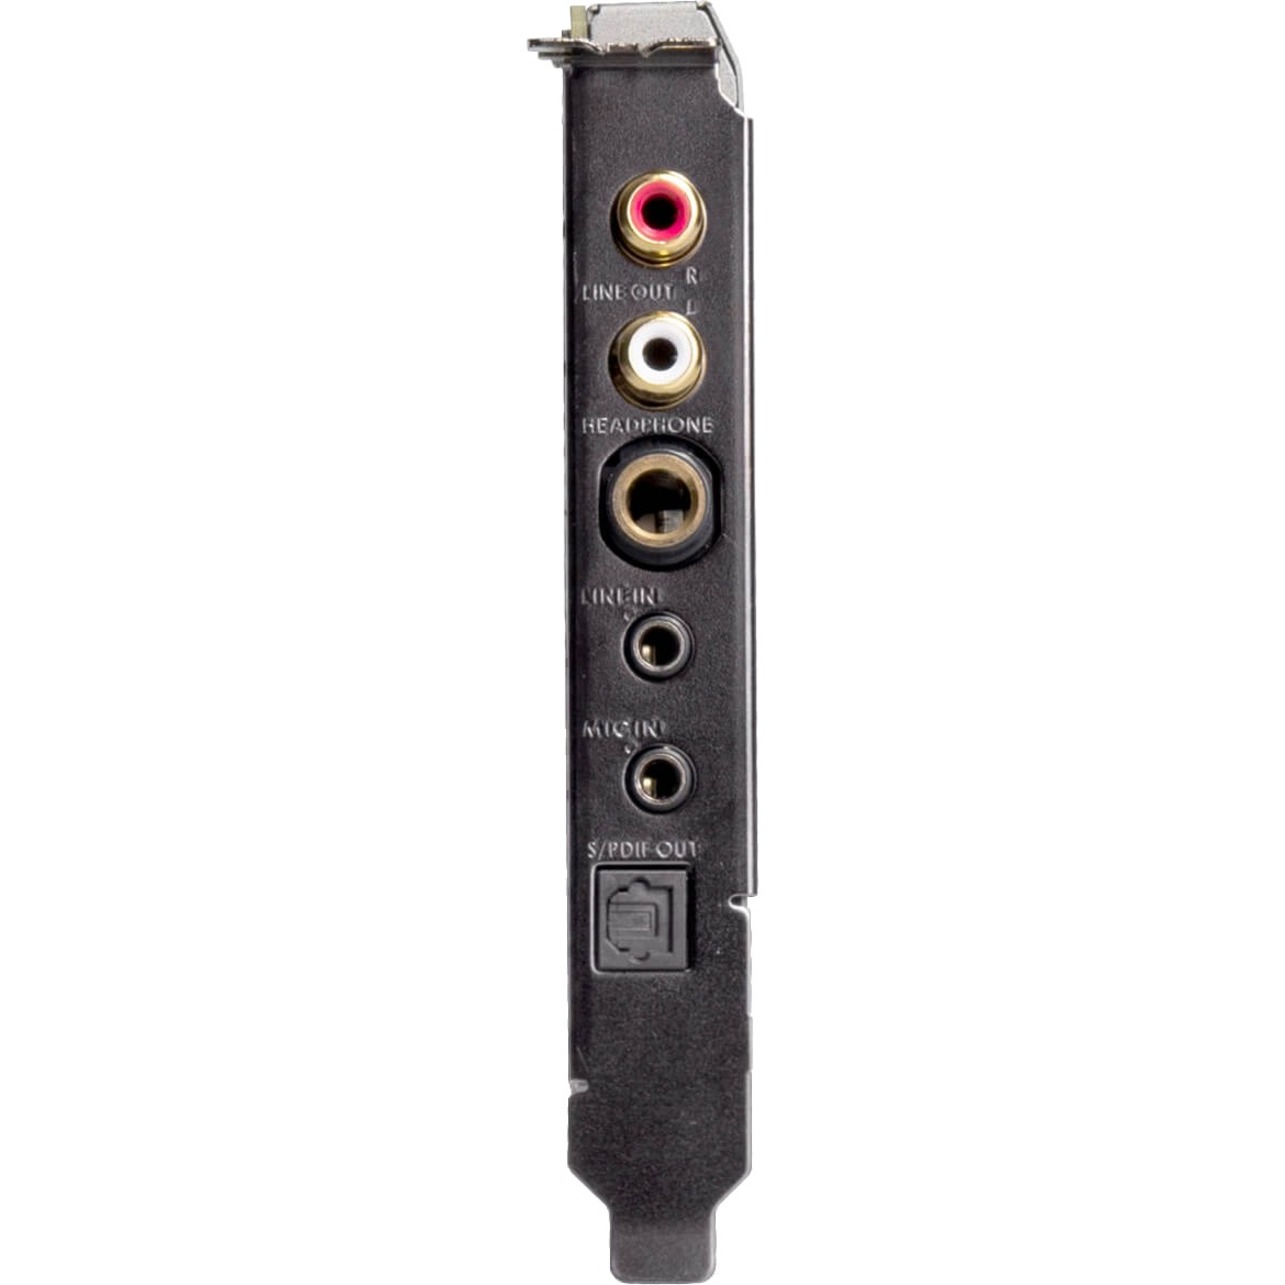 EVGA Nu Audio PCIe Sound Card - image 5 of 7